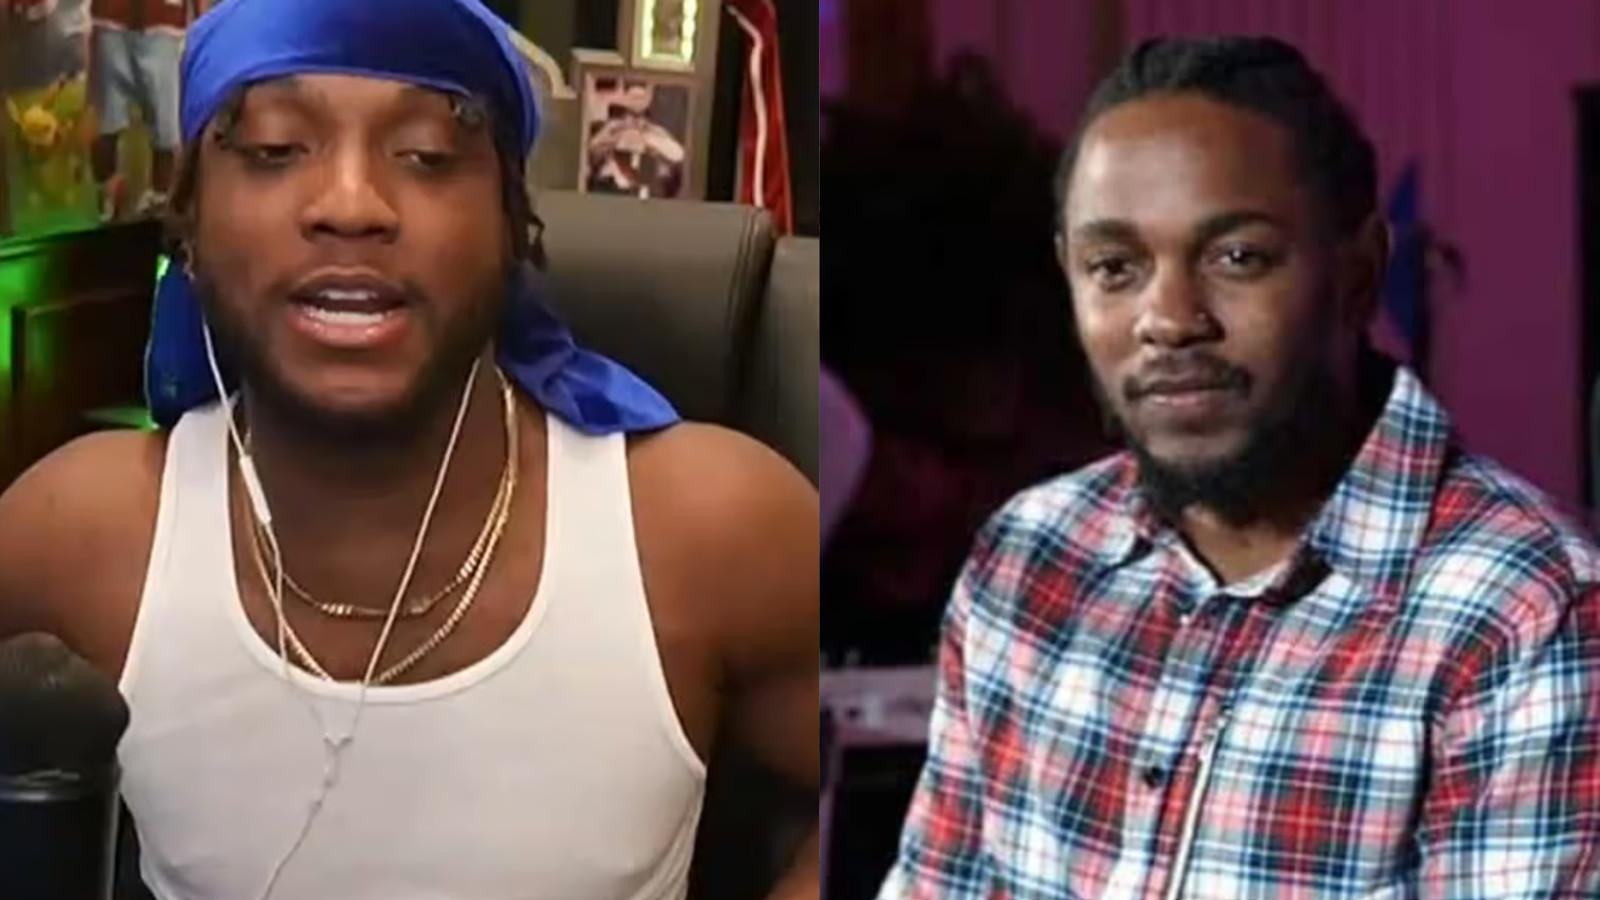 Streamer YourRAGE next to photo of Kendrick Lamar